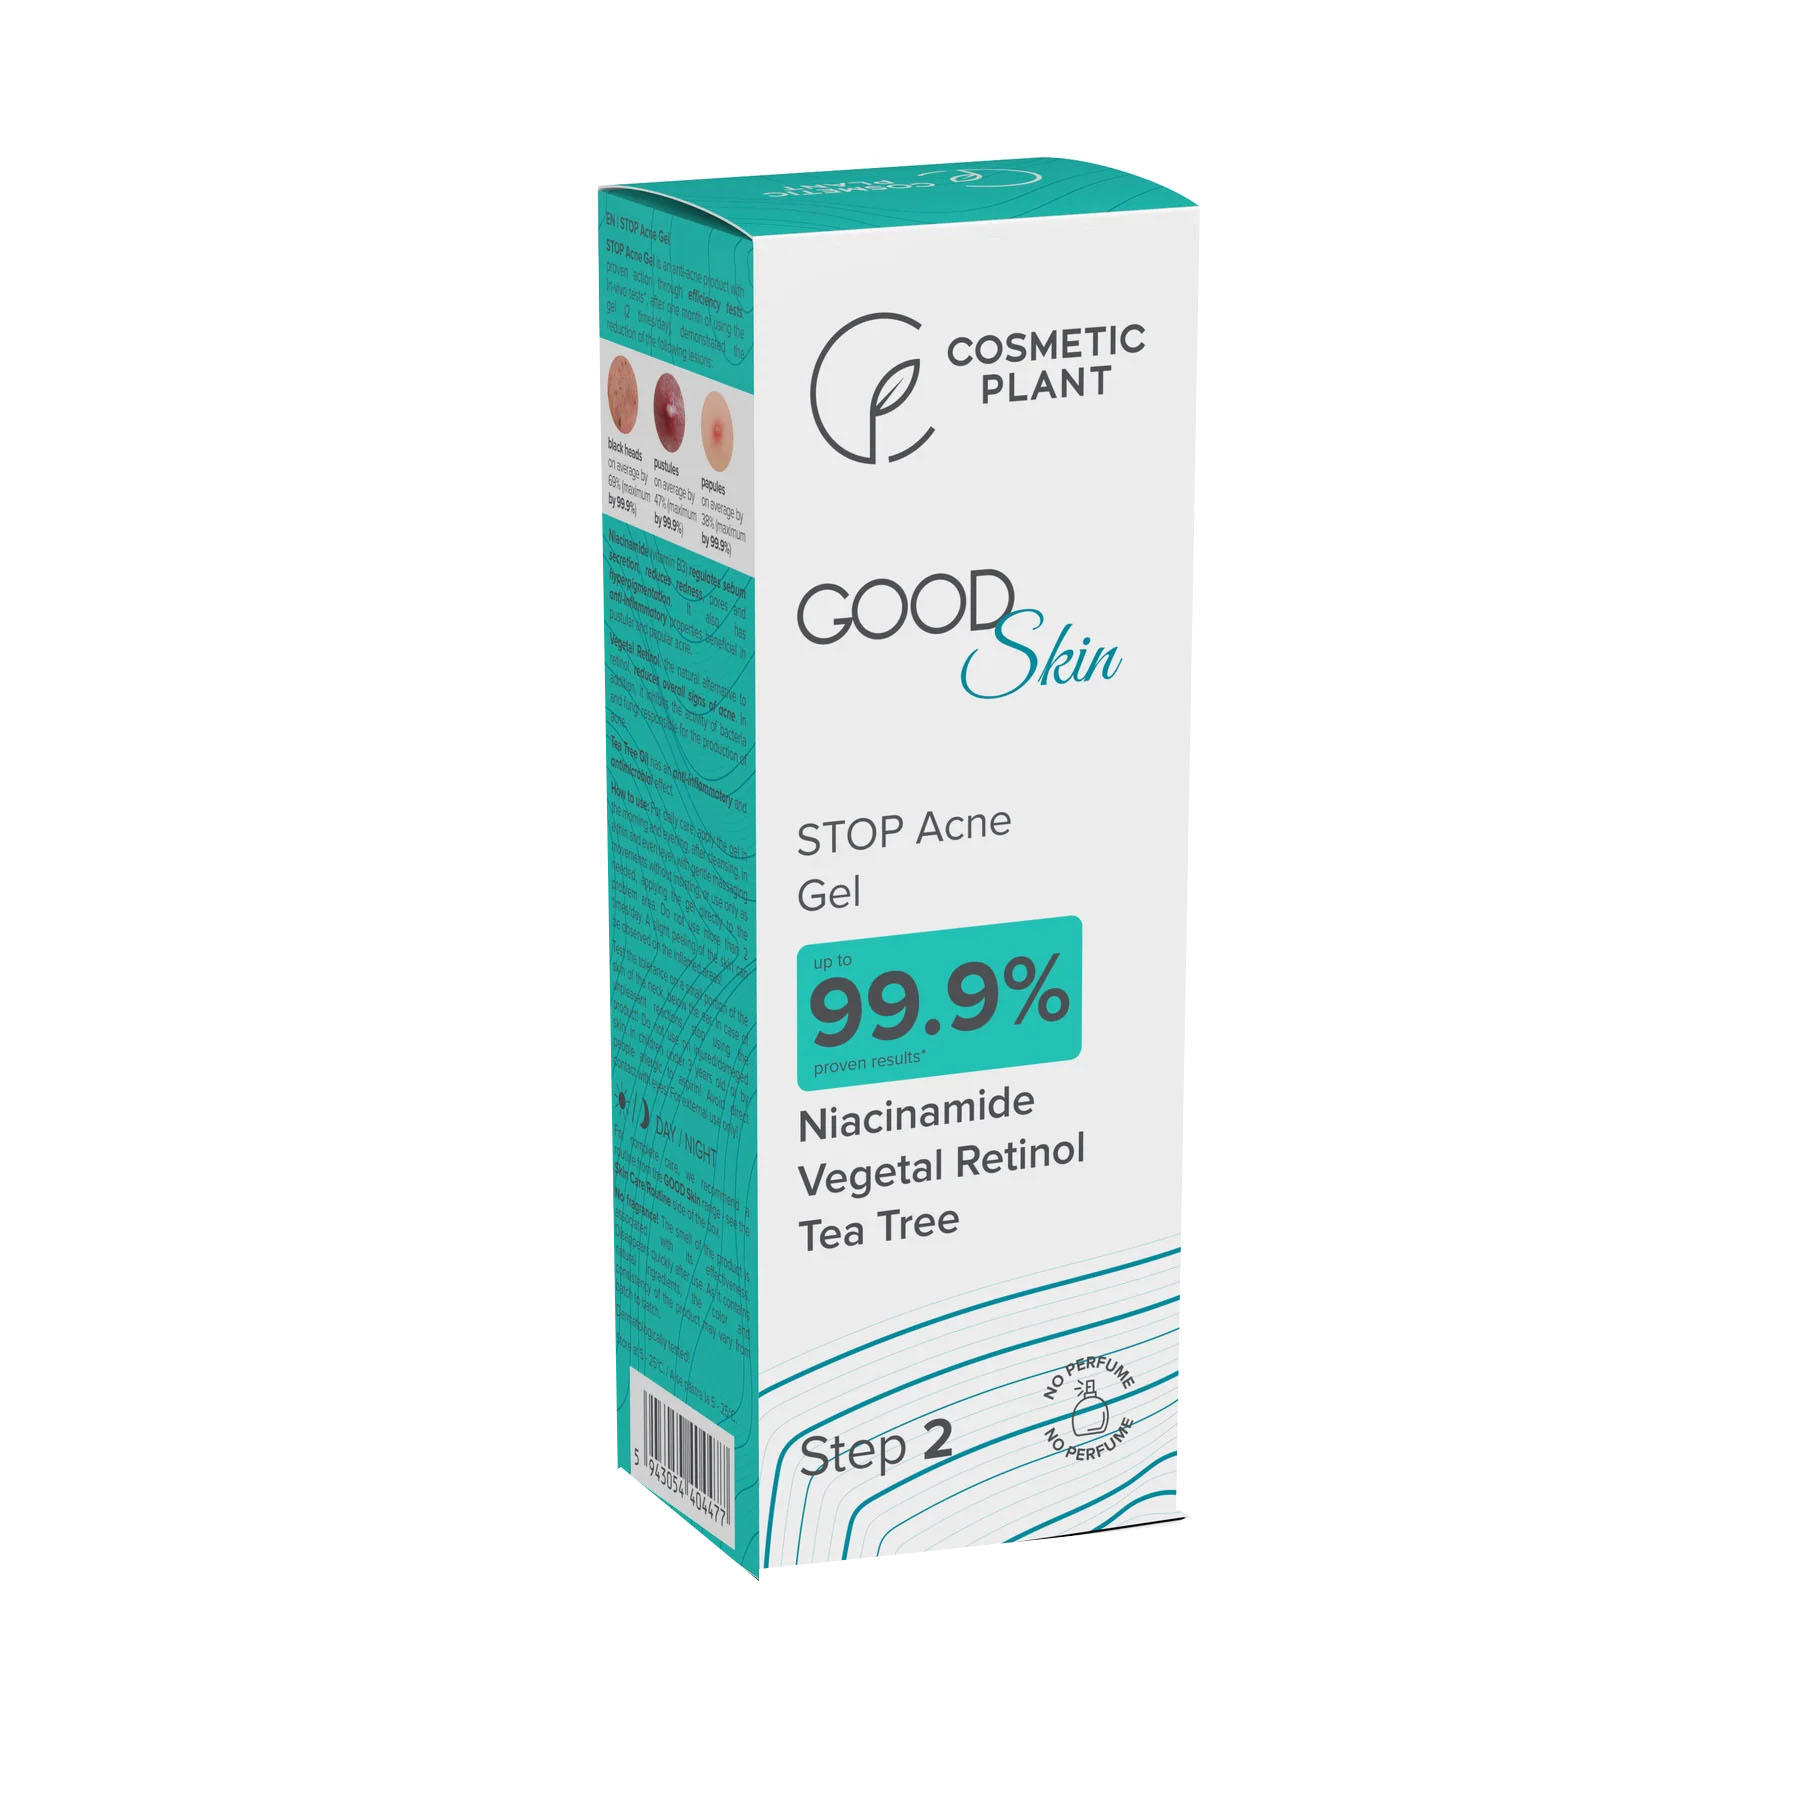 Good Skin Stop Acne Gel cu Niacinamida Vegetal Retinol si Tee Trea Oil 30 mililitri Cosmetic Plant